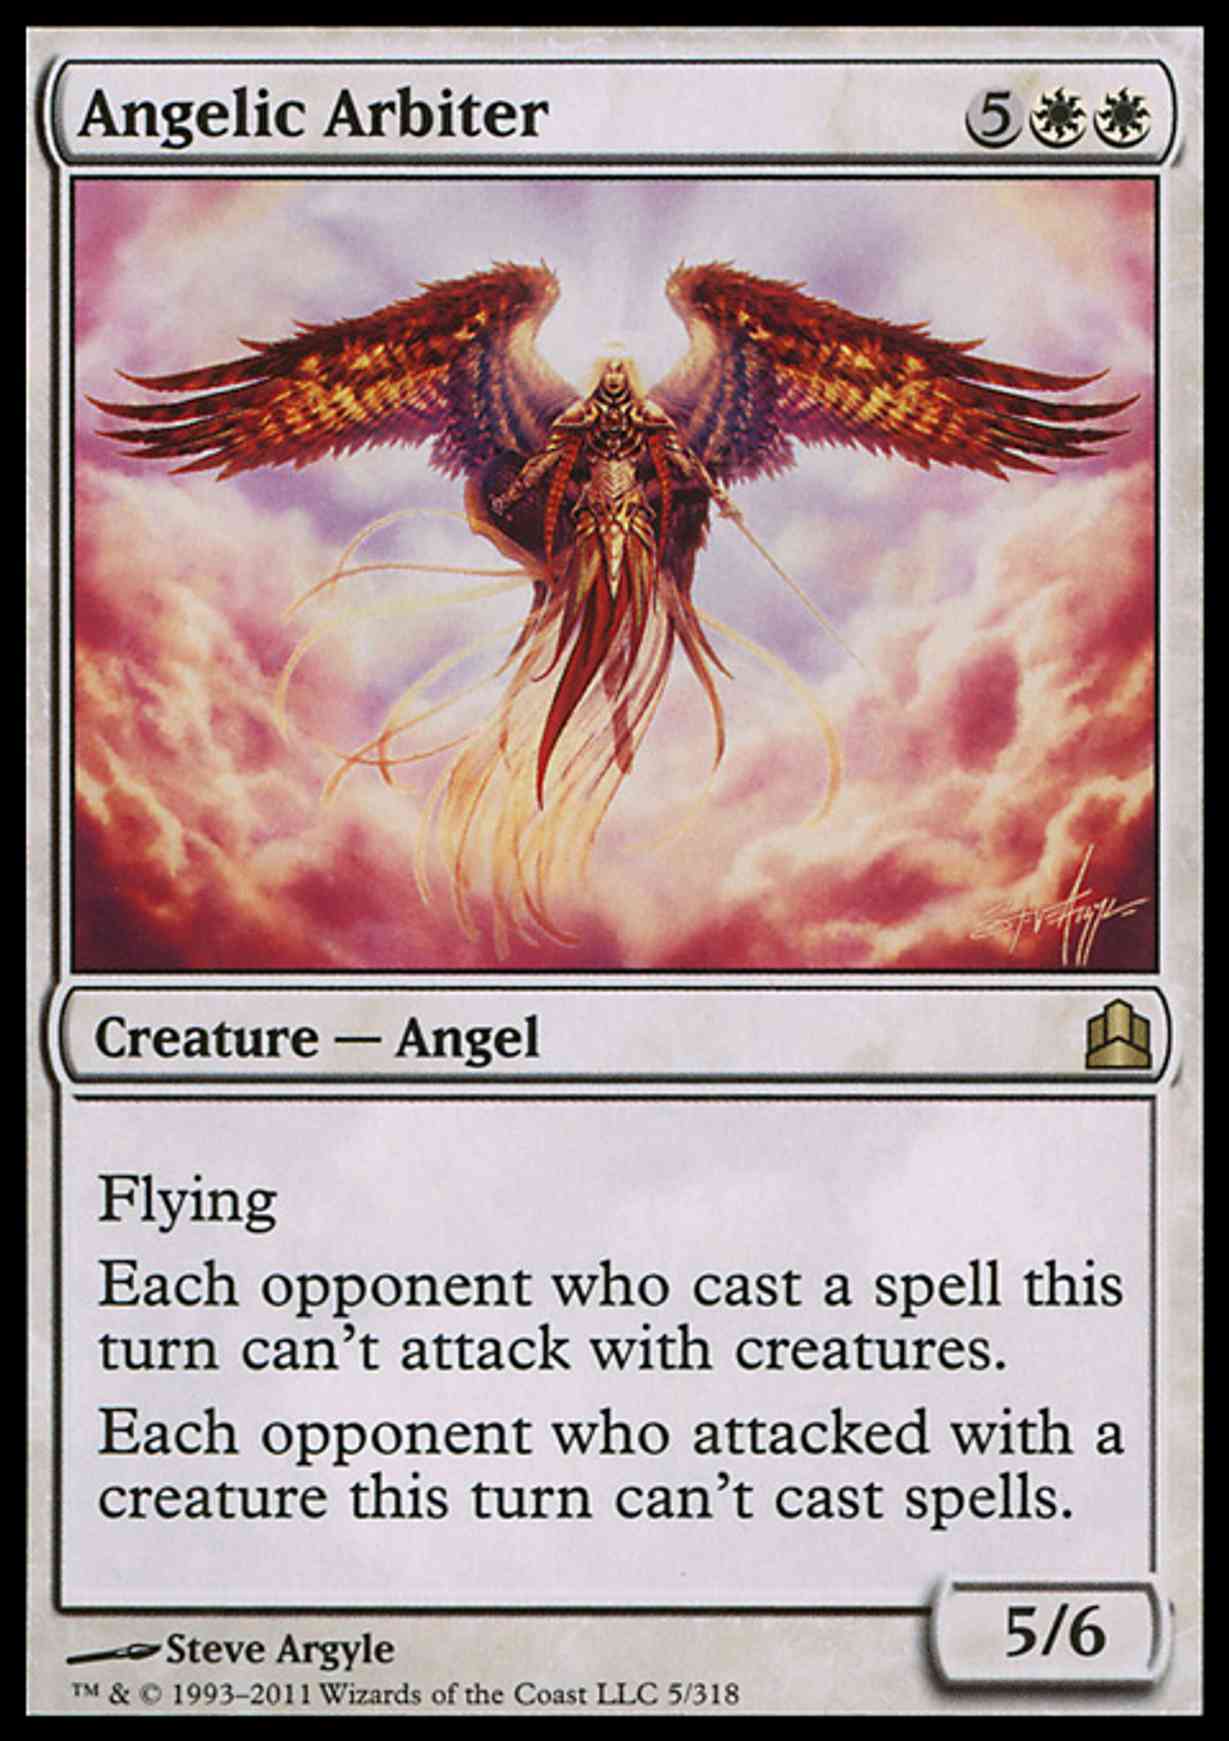 Angelic Arbiter magic card front